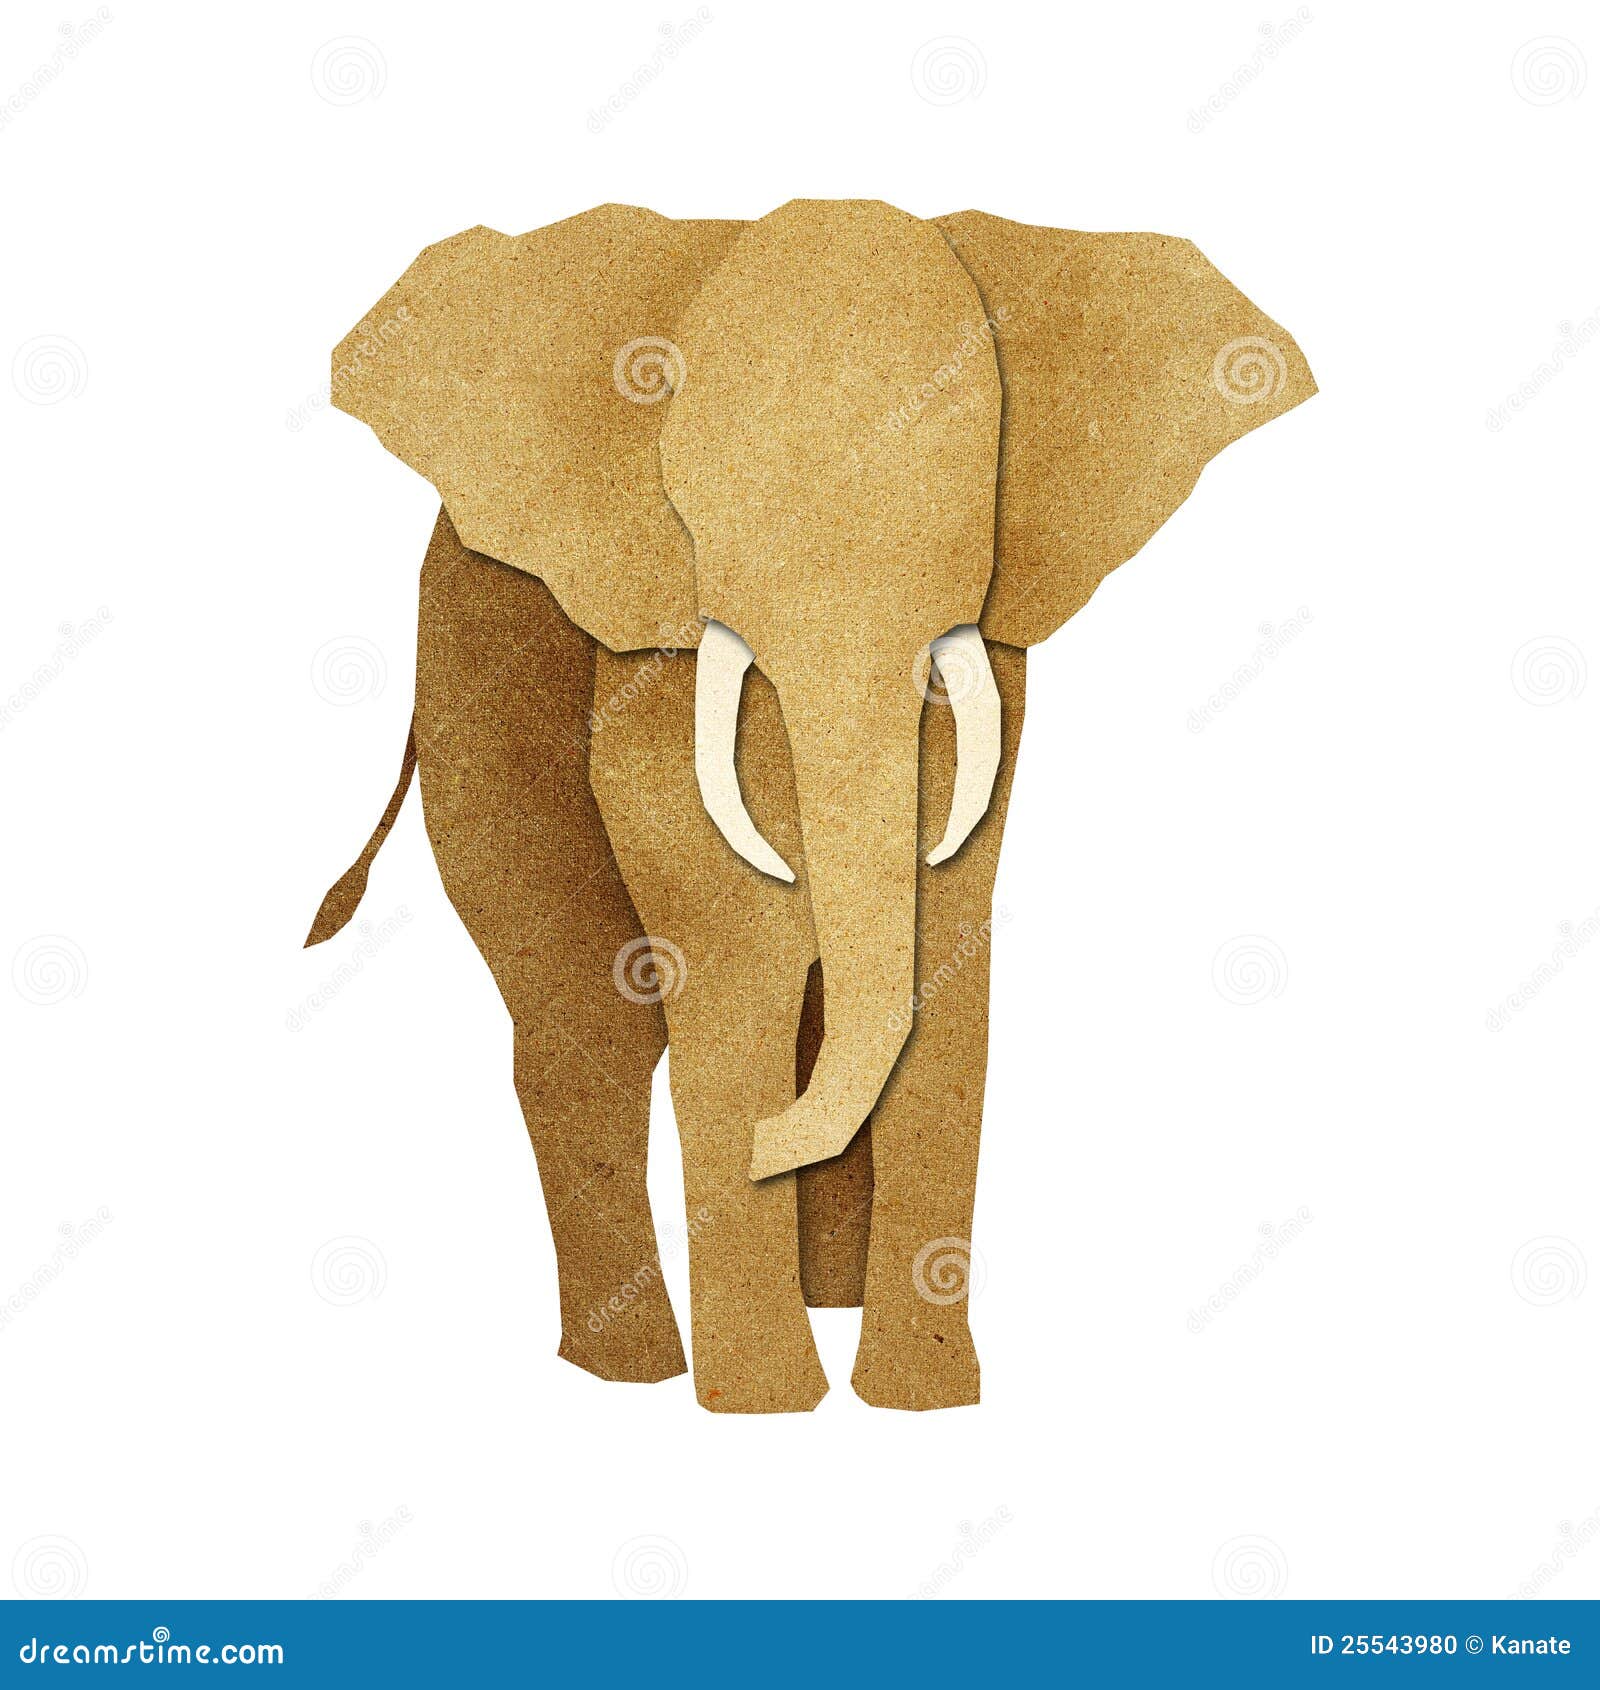 Essay on elephants